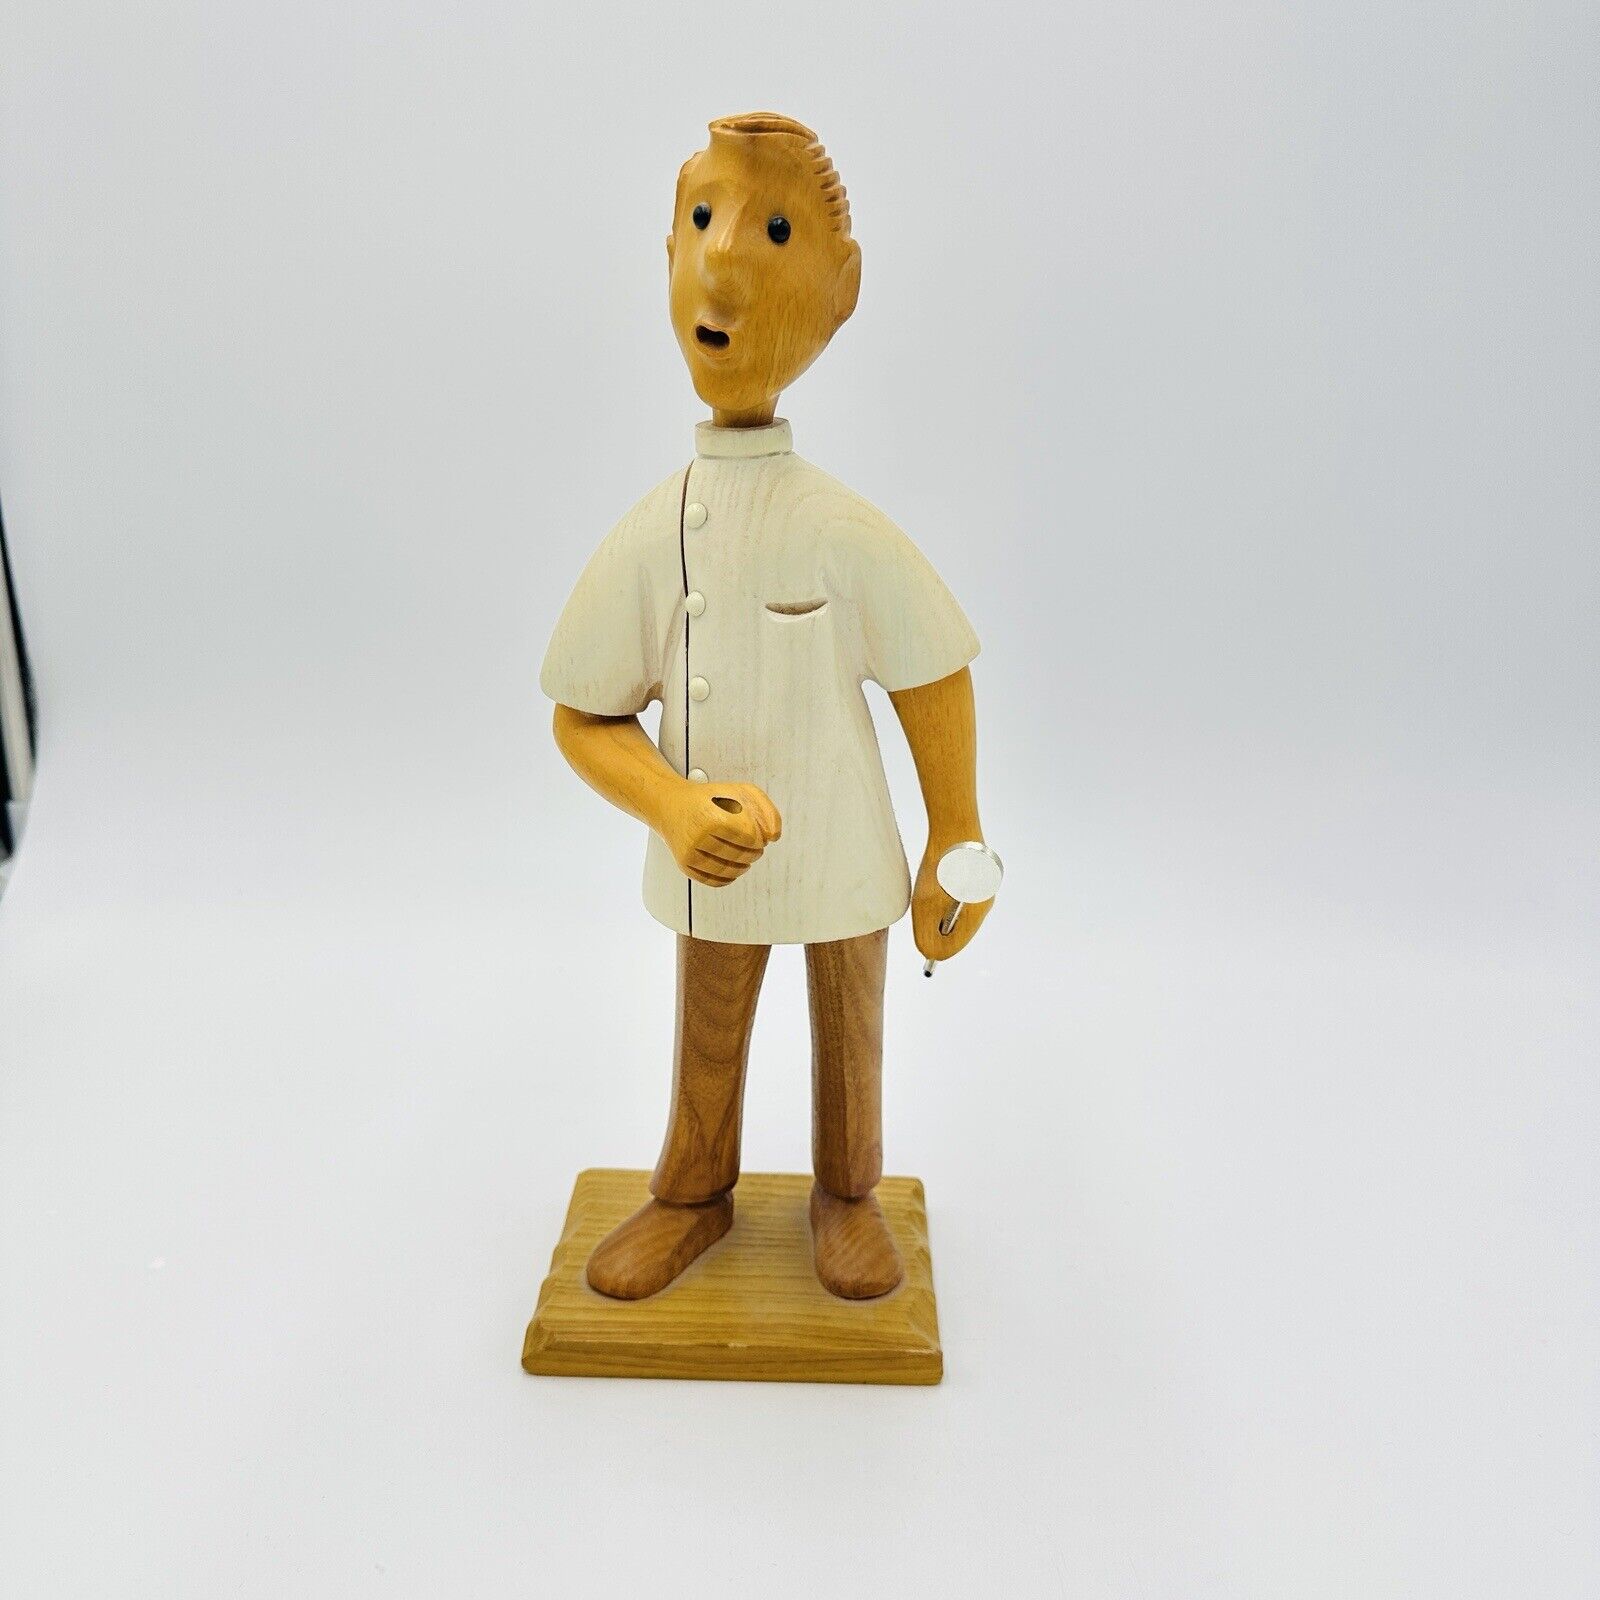 Euromanos Italia Dentist Figurine Italian Hand-Carved Wooden Medical Home Decor